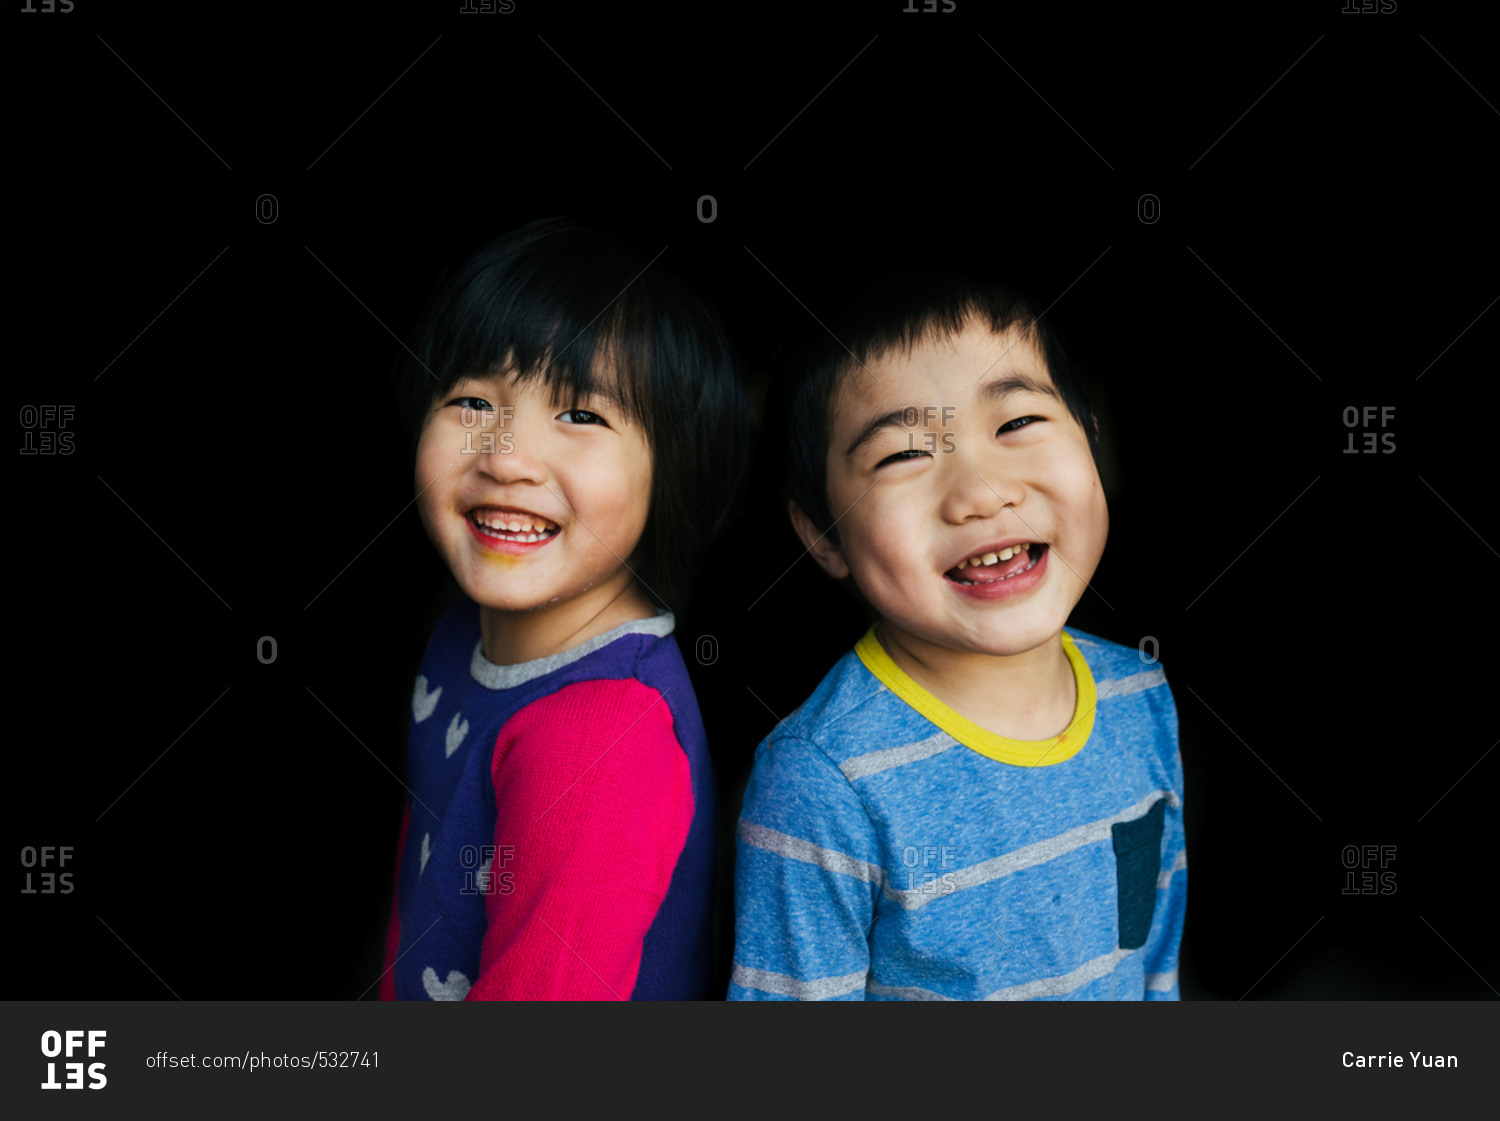 Fraternal twins smiling together